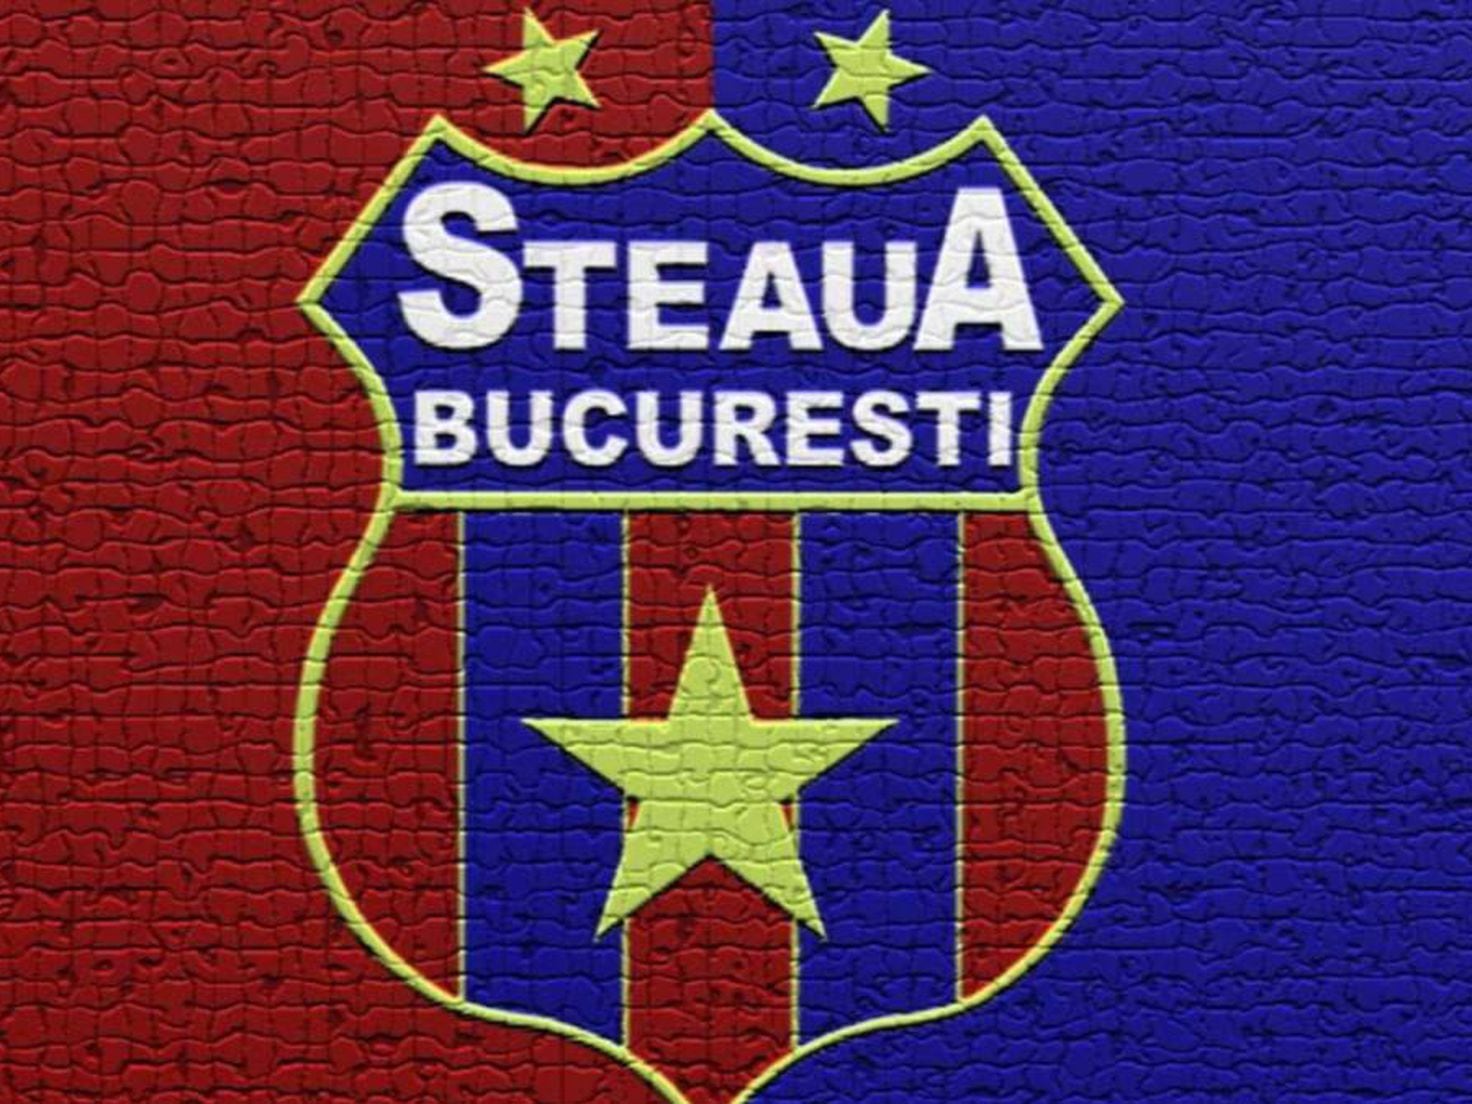 Steaua Bucuresti - 1986  European football, Football, Soccer